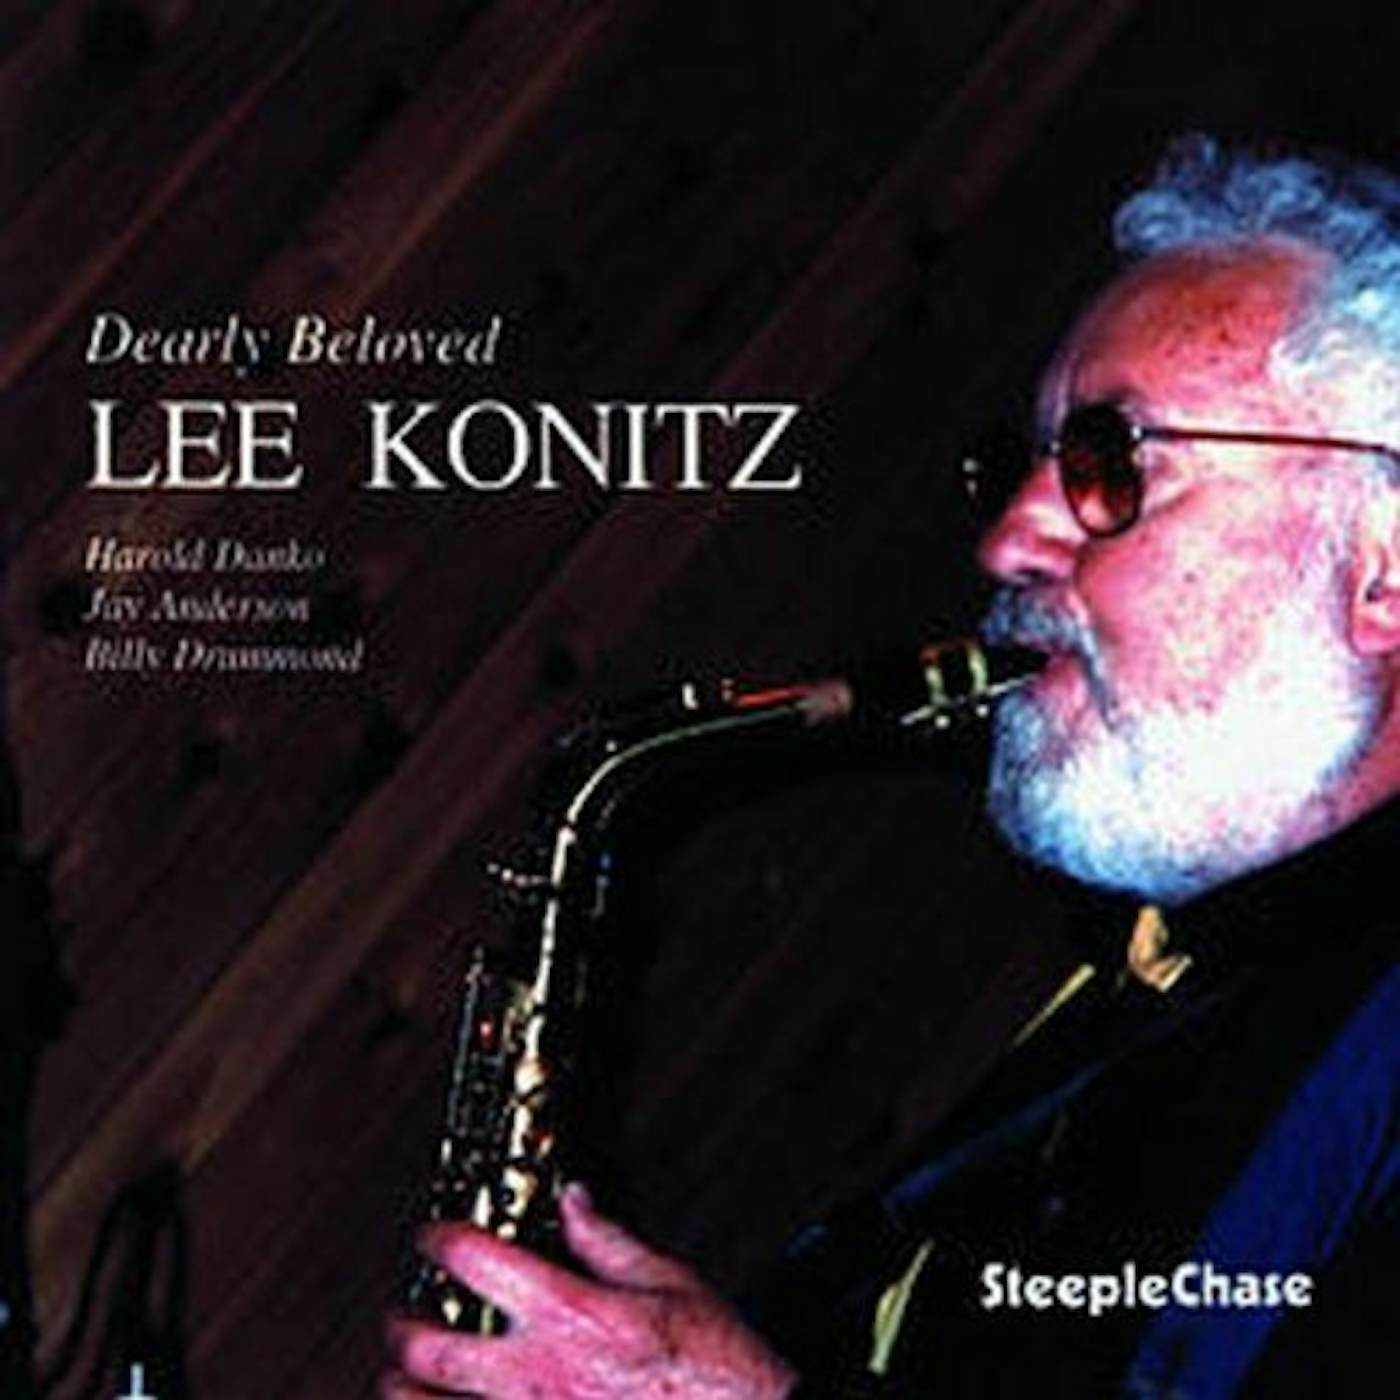 Lee Konitz DEARLY BELOVED CD